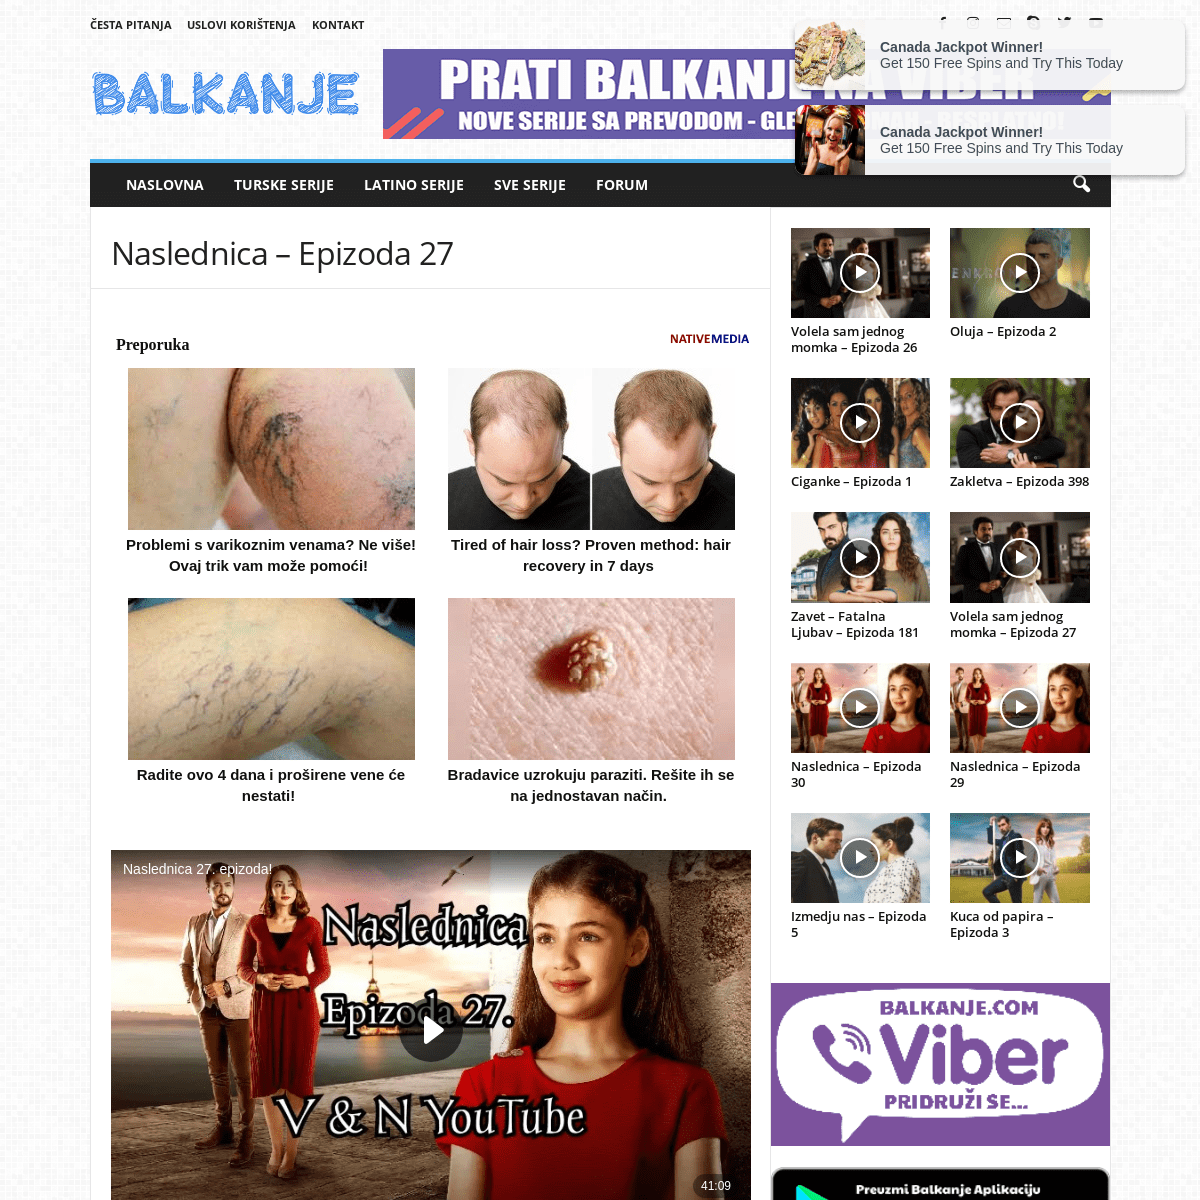 A complete backup of https://balkanje.com/naslednica-epizoda-27/